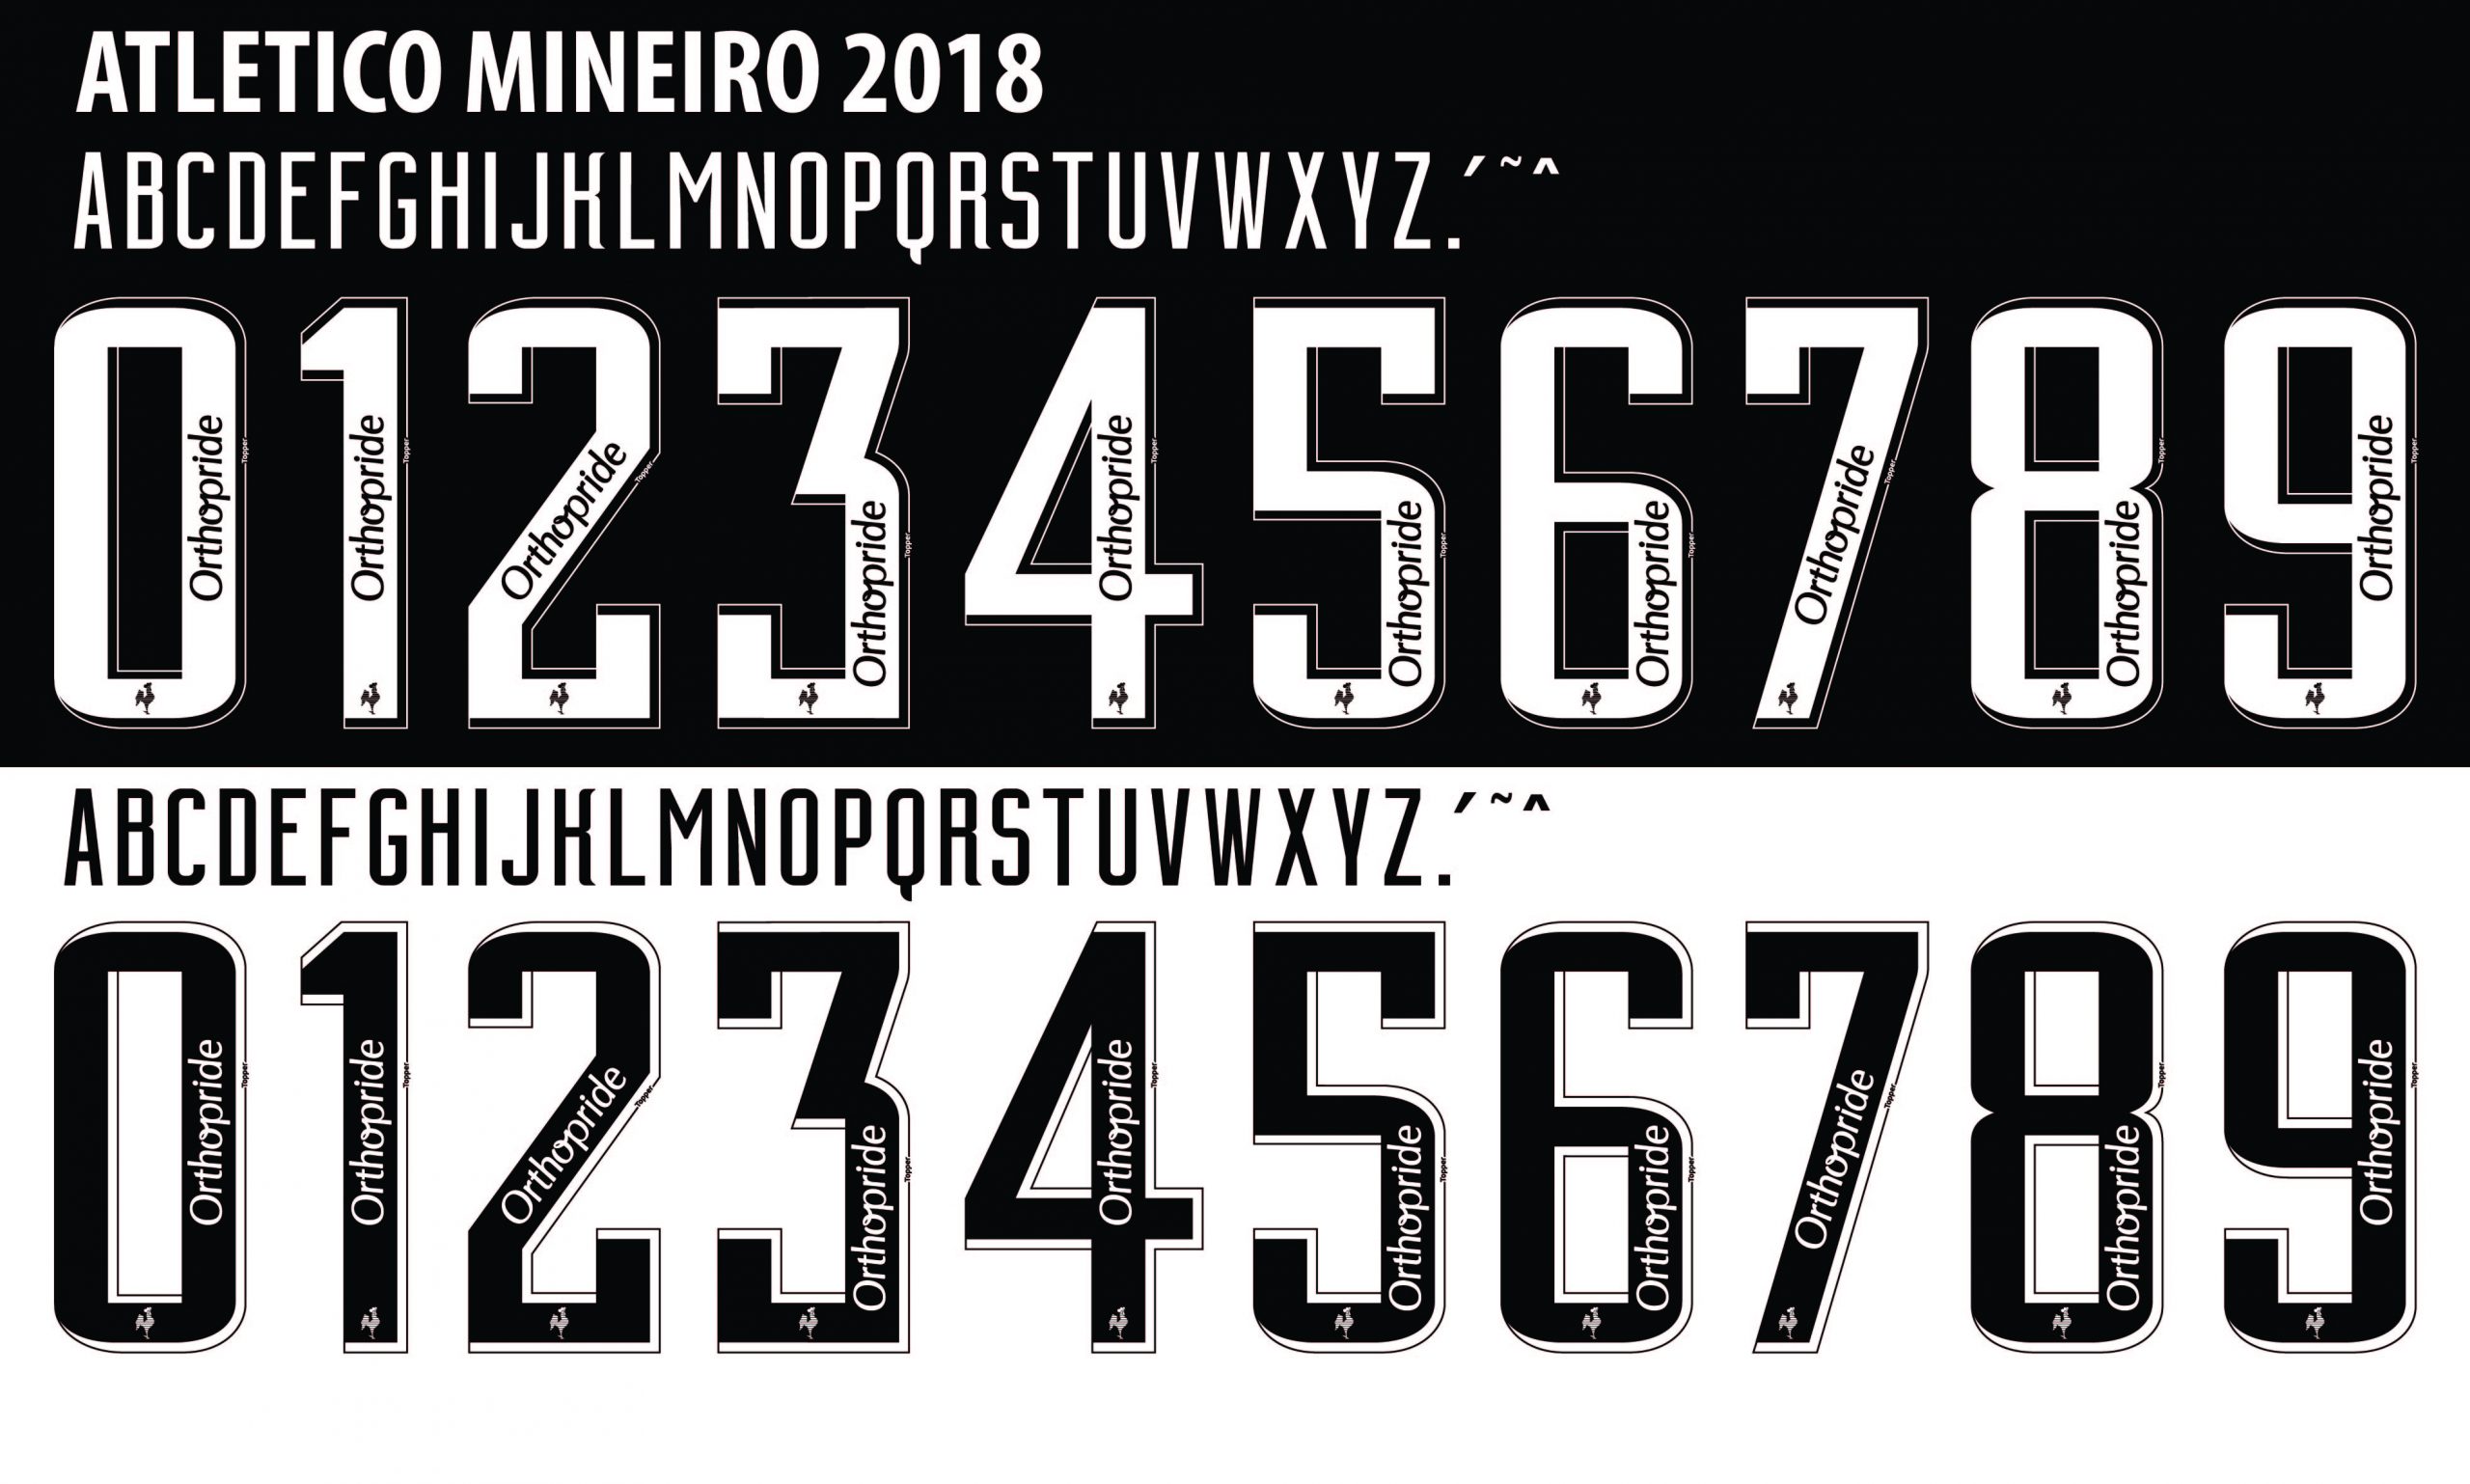 Atletico Miniero 2018/2019 - Football Kit Nameset - YFS - Your Football ...